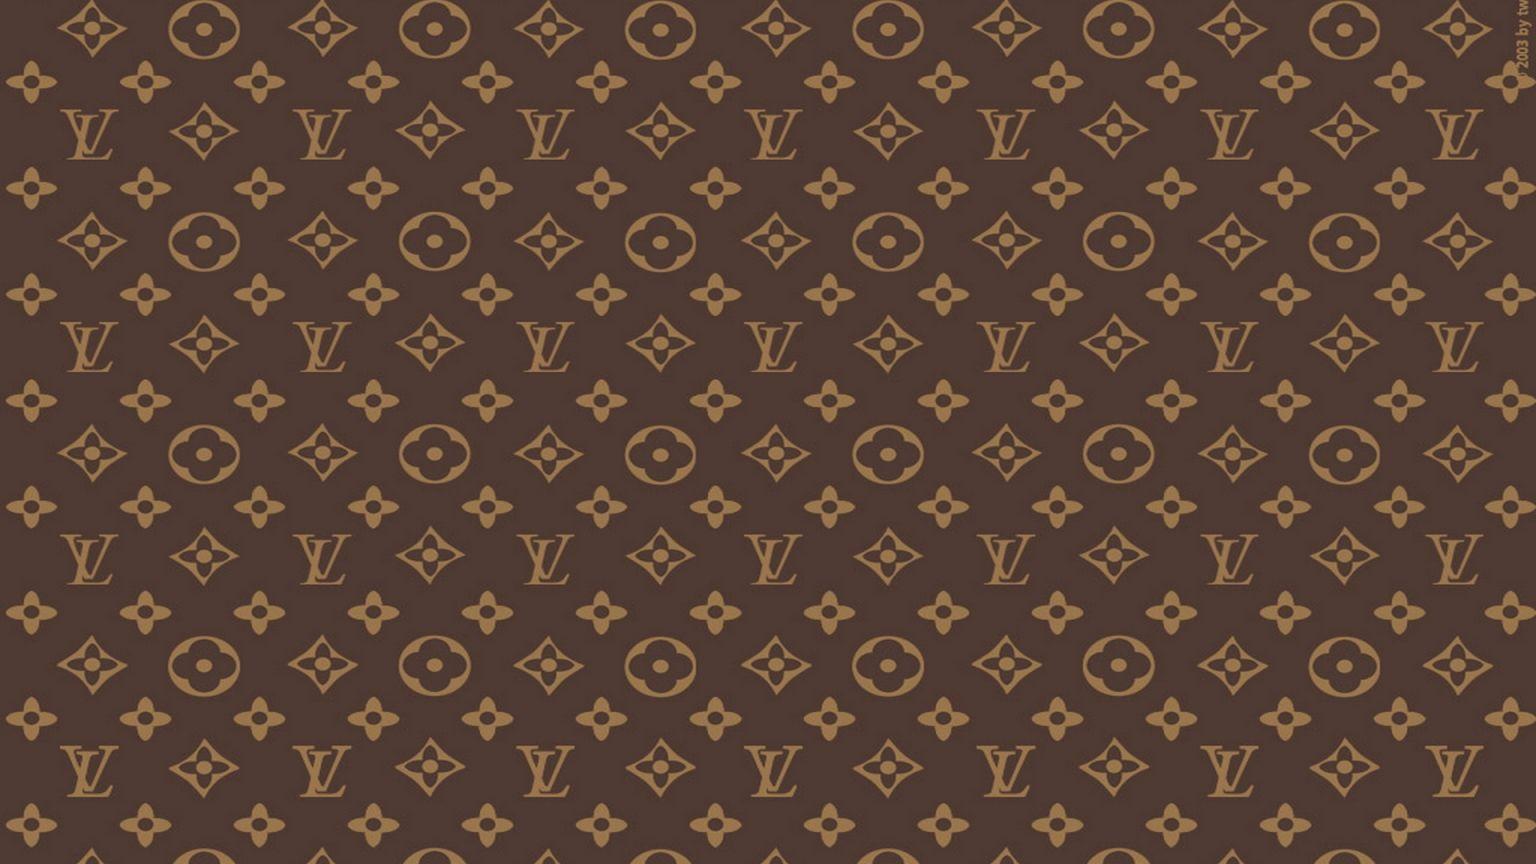 Download Luxury Meets Desktop with a Louis Vuitton Style Wallpaper